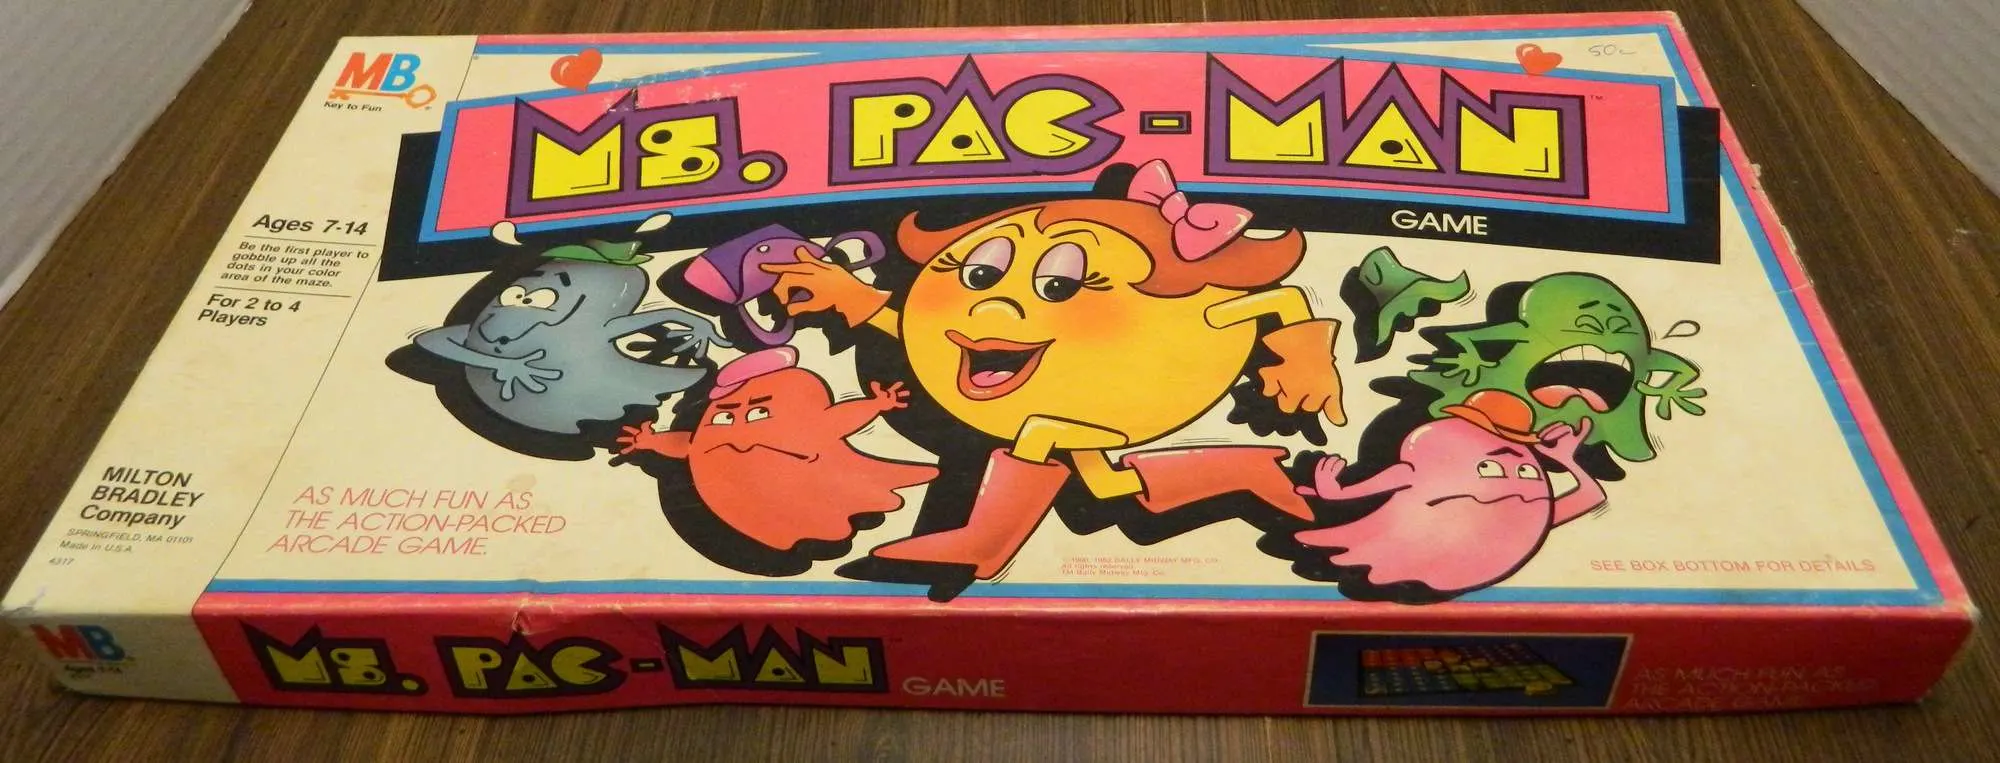 Ms. Pac-Man Board Game Box